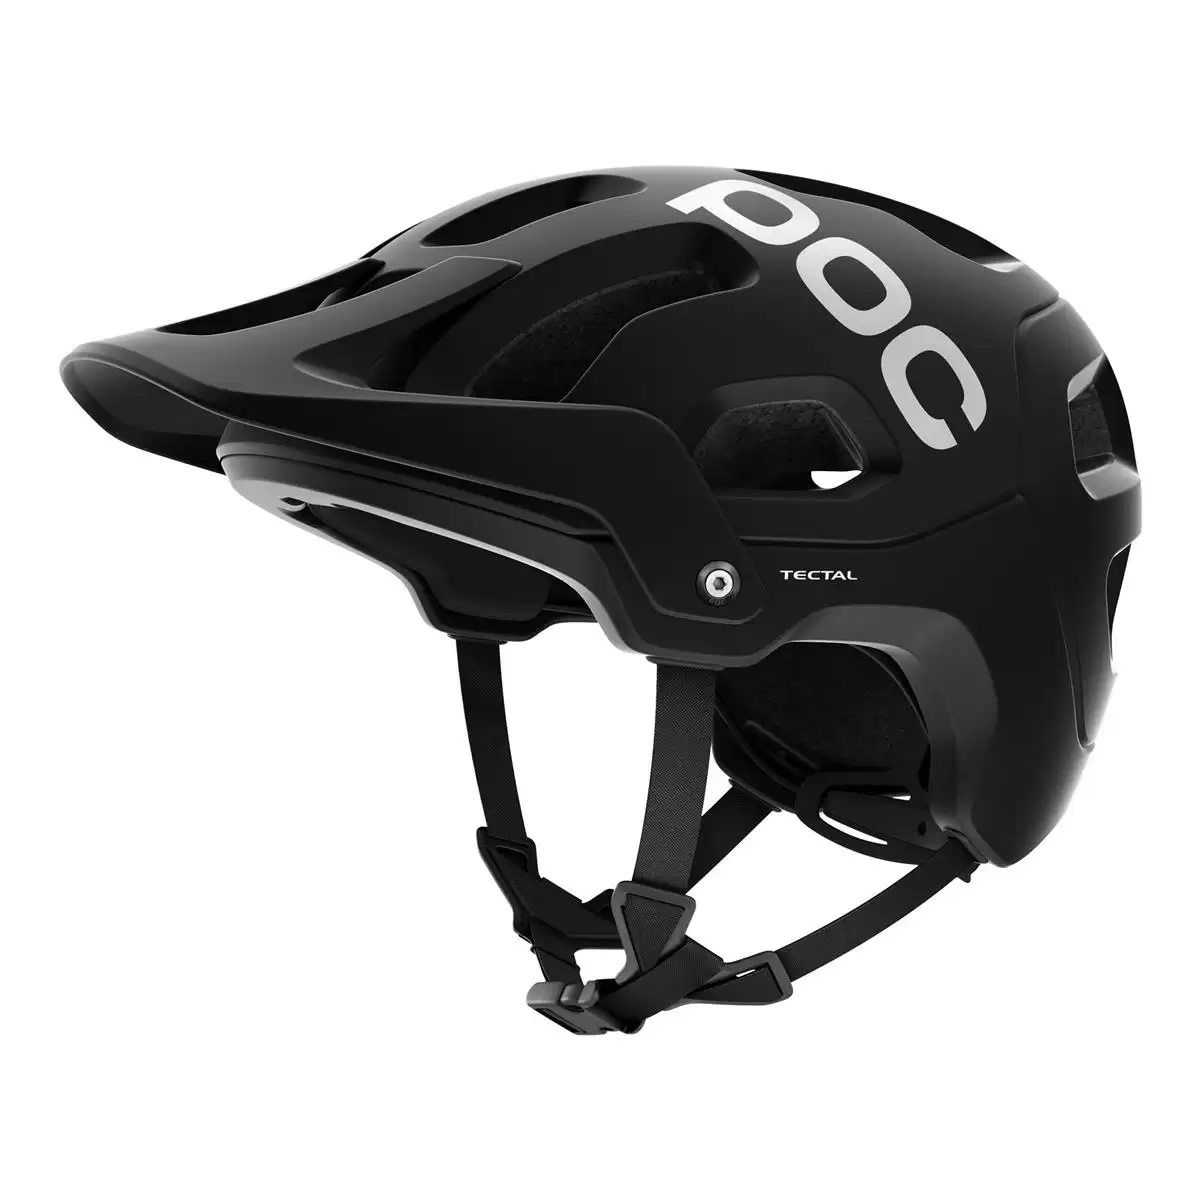 Enduro helmet Tectal black size XS-S (51-54cm) - image